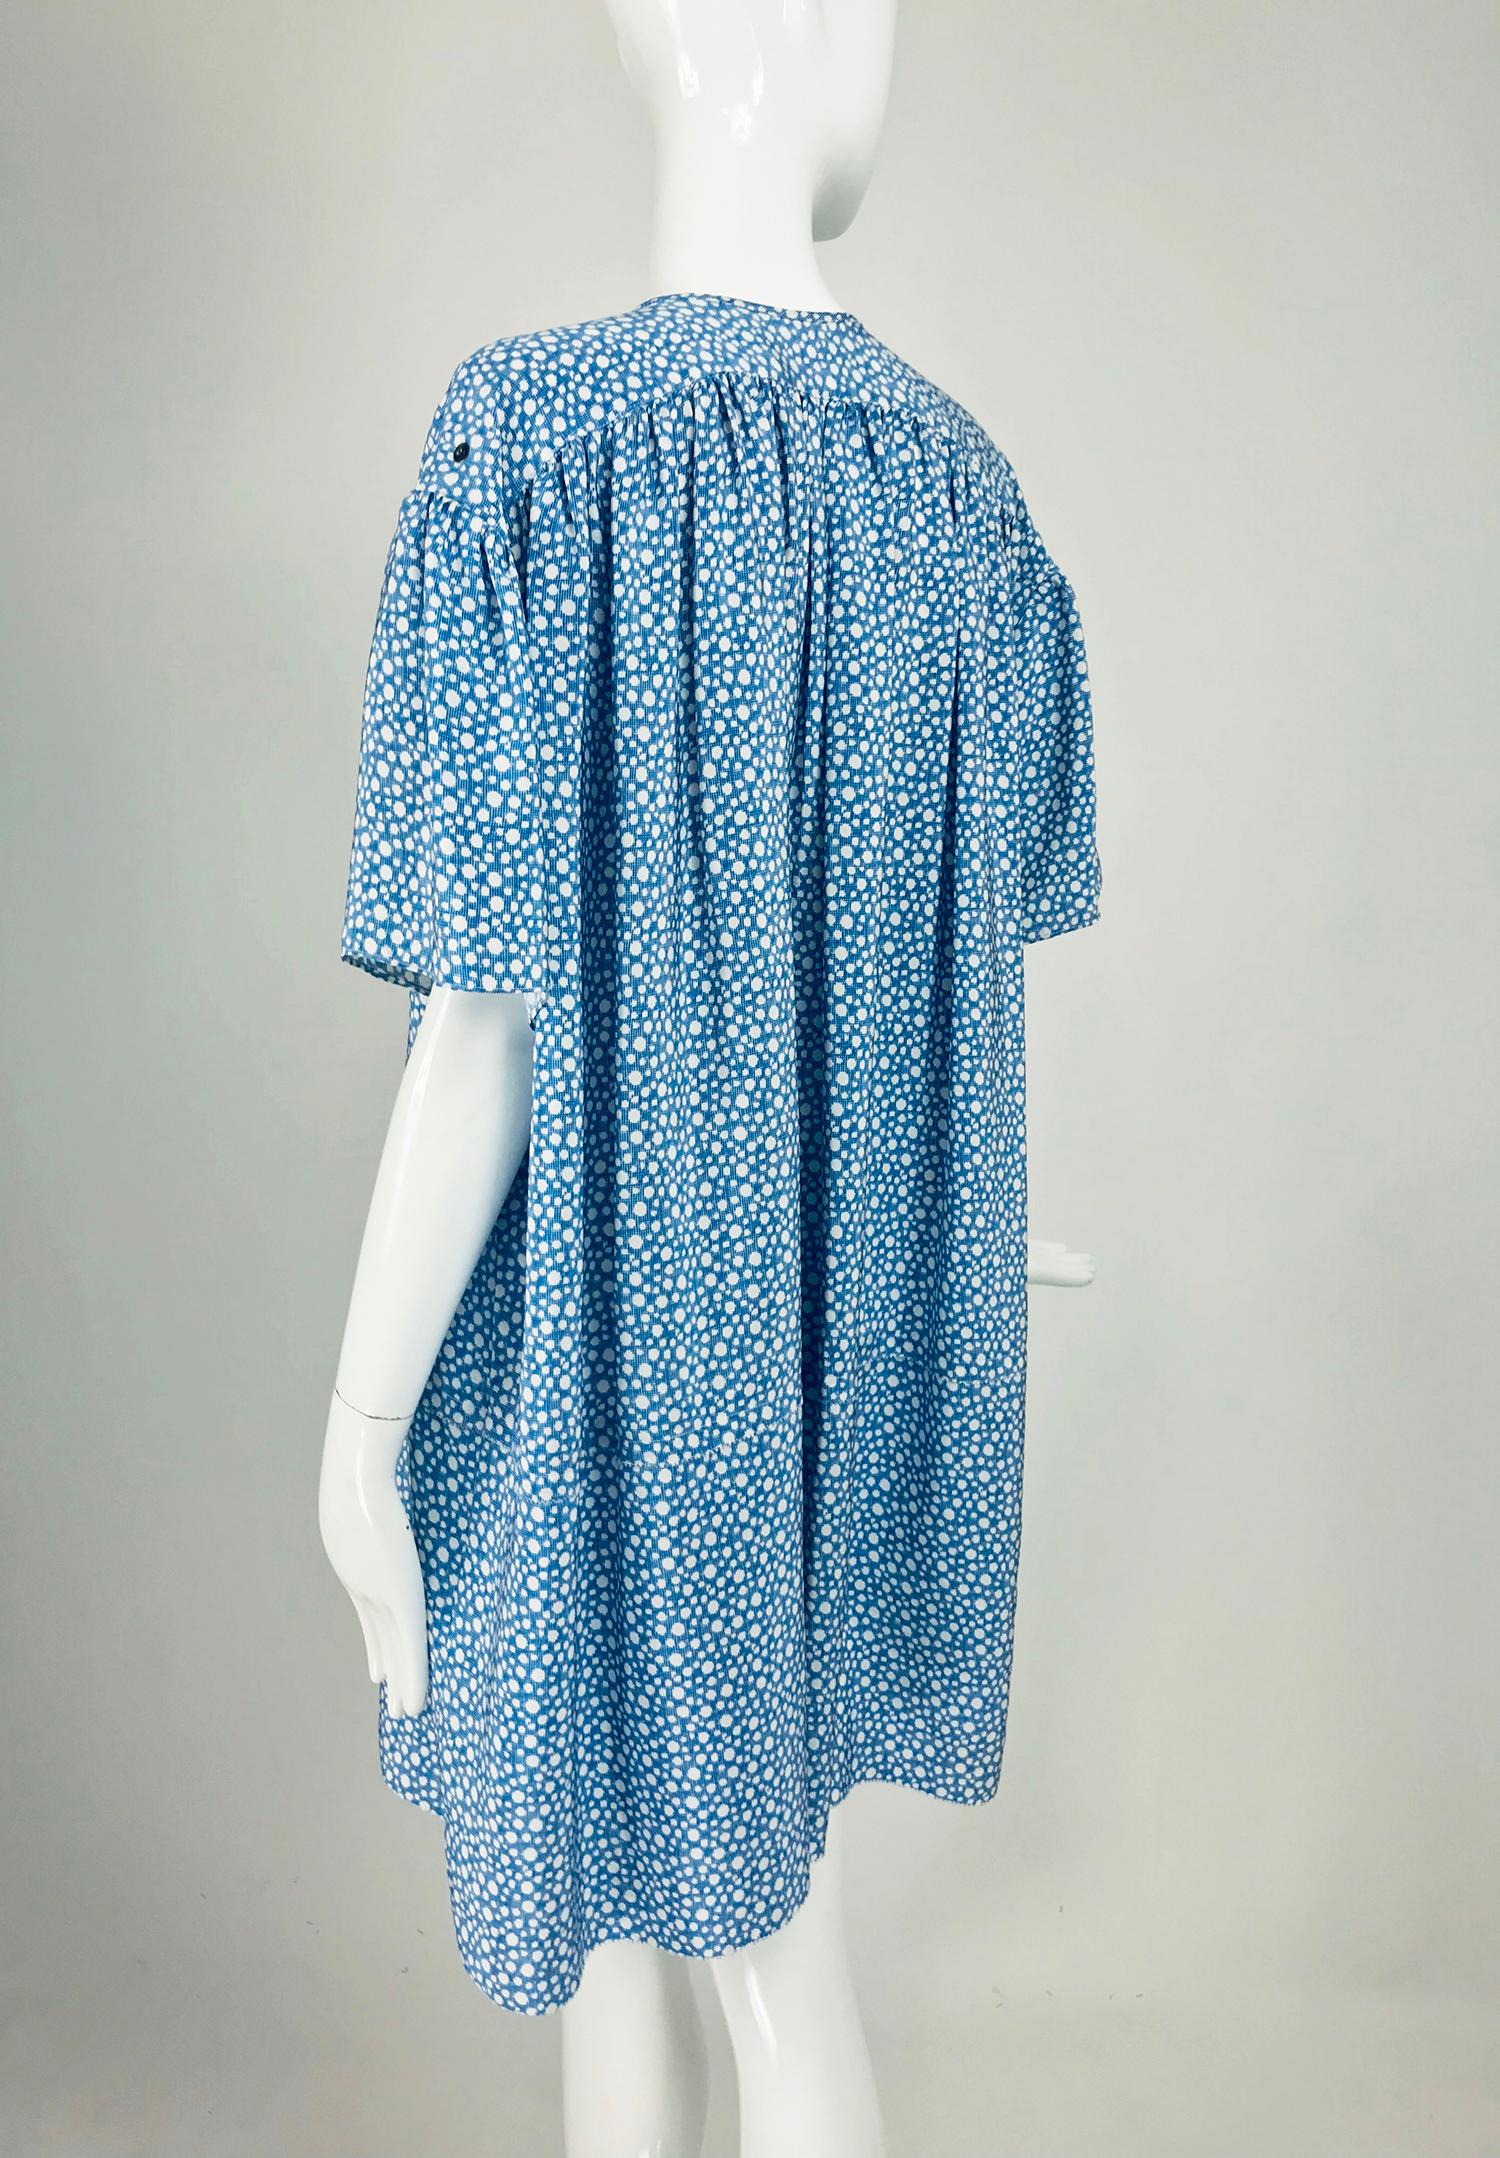 Balenciaga Blue and White Silk Dot Print Asymmetrical Dress   In Good Condition For Sale In West Palm Beach, FL